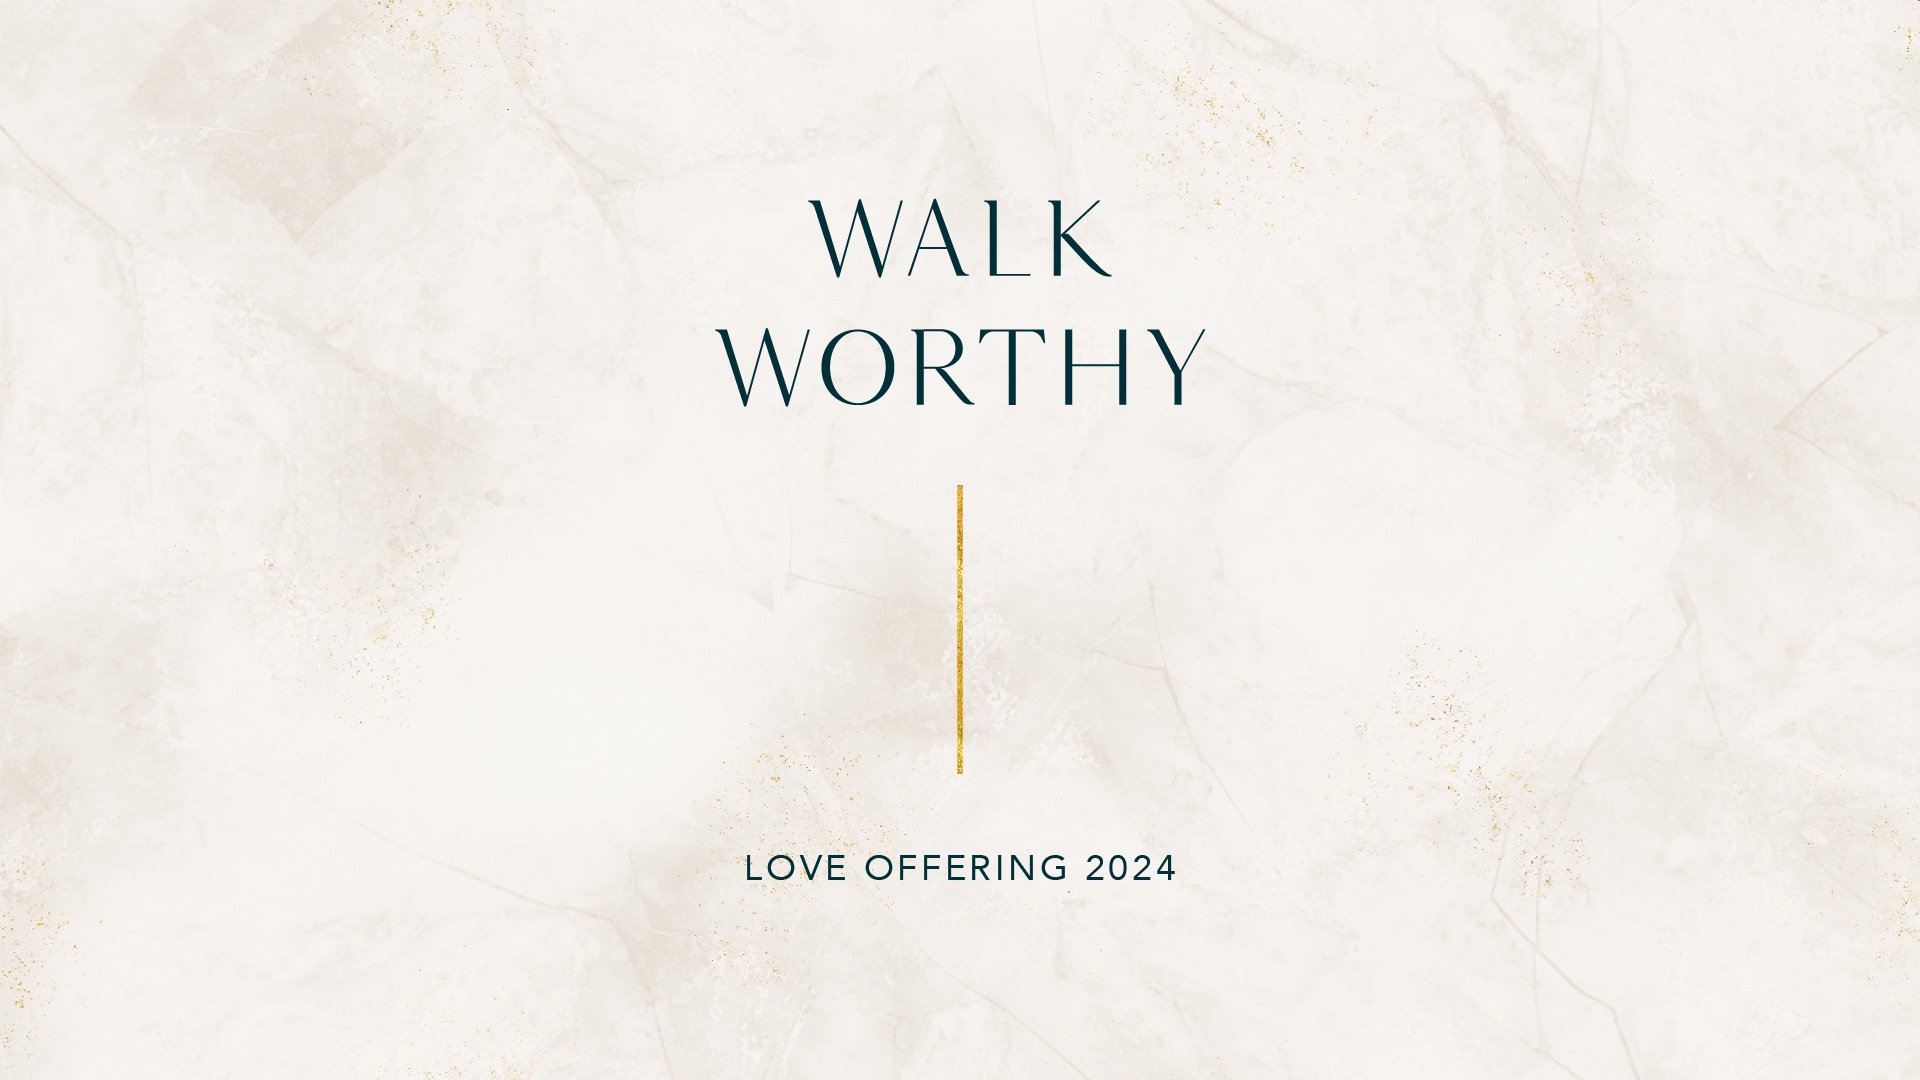 Love Offering 2024 // Walk Worthy